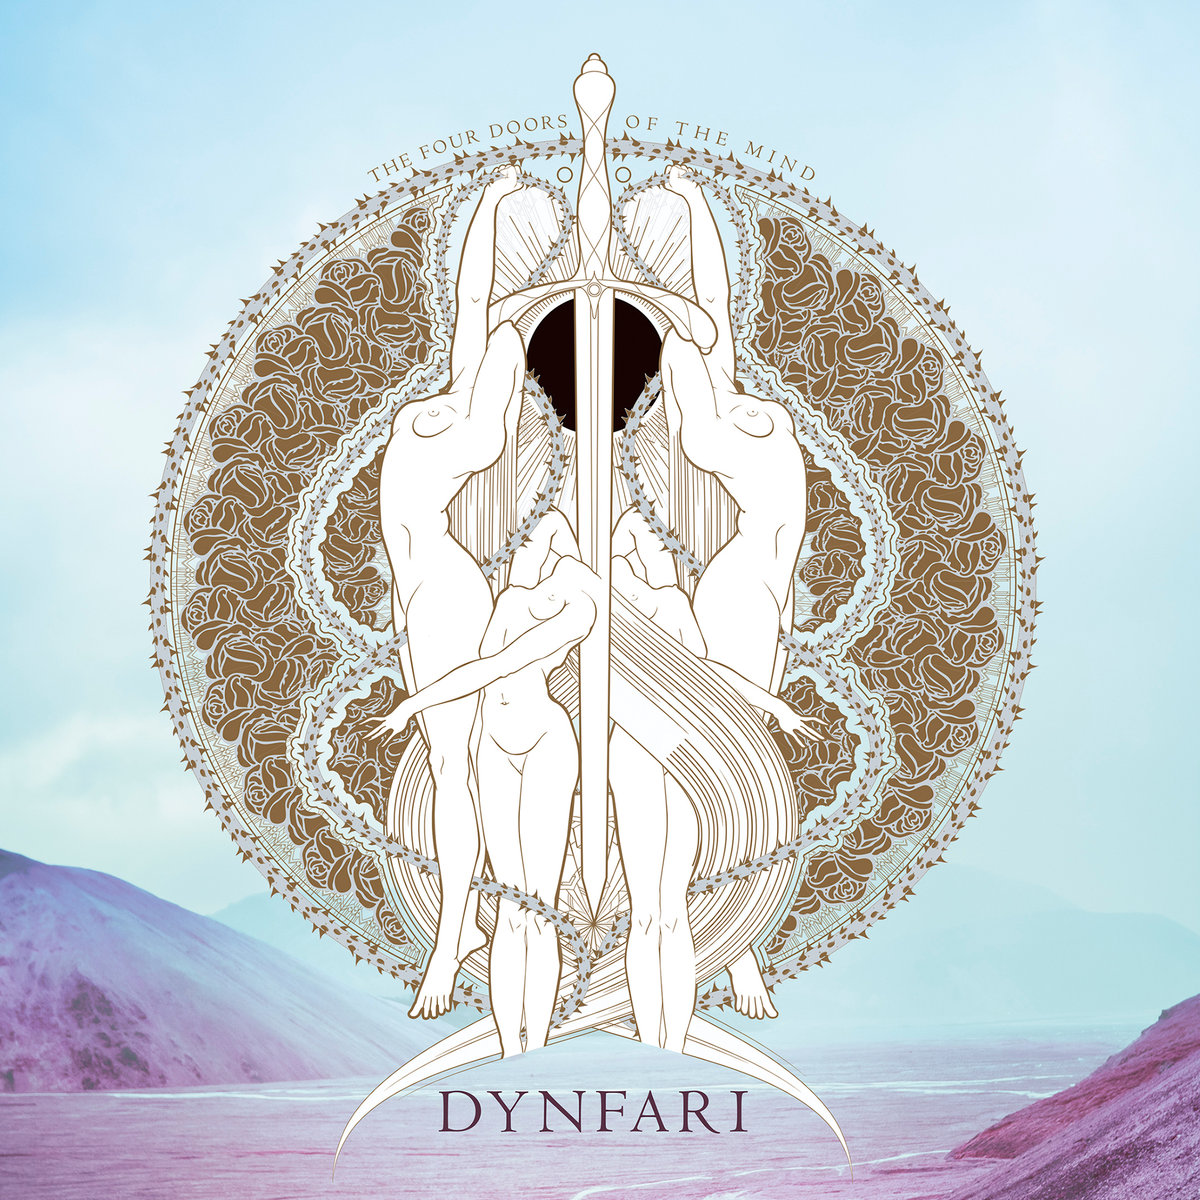 Dynfari – The Four Doors Of The Mind